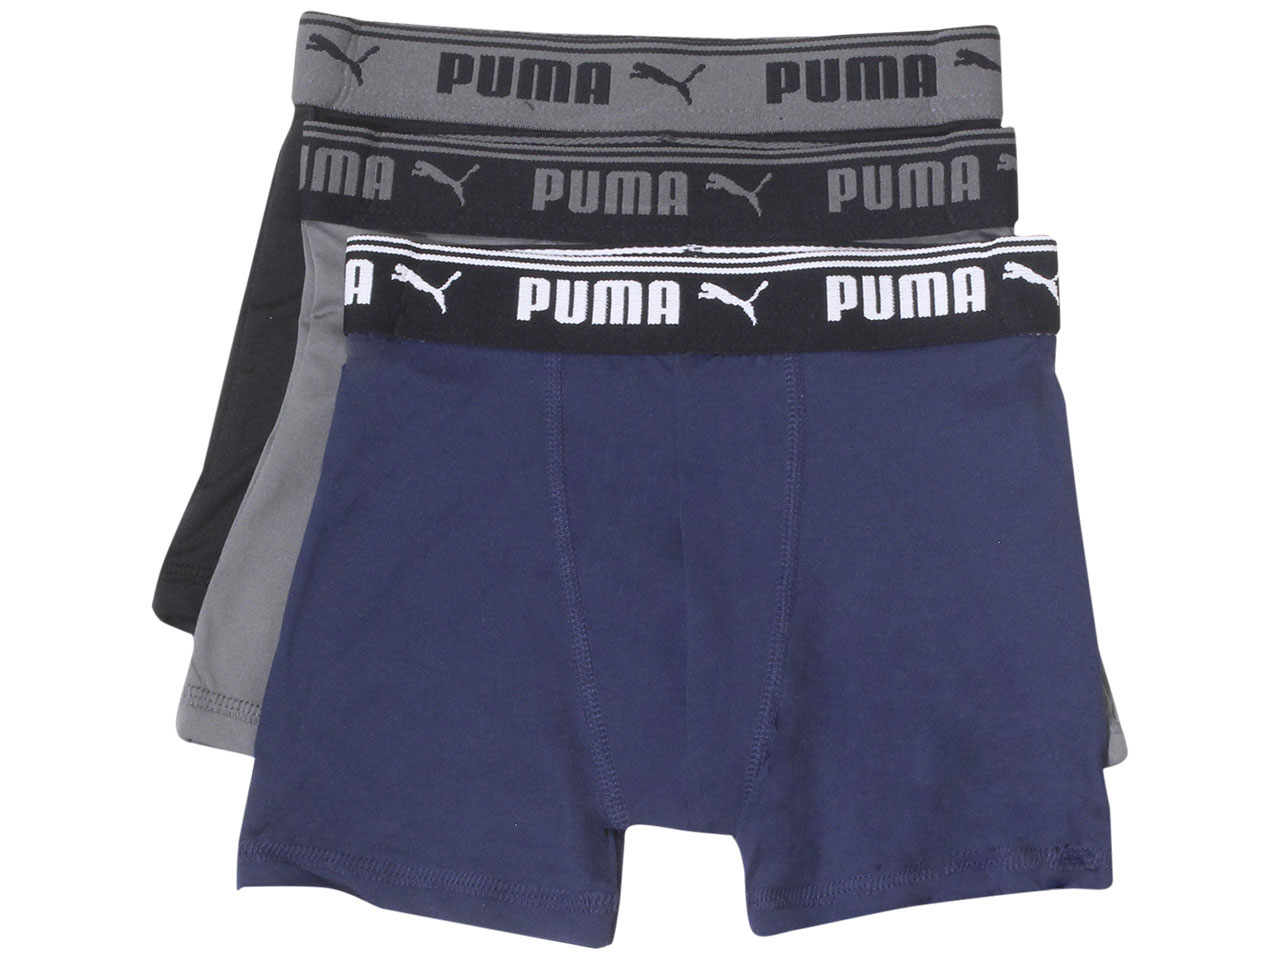 https://www.joylot.com/gallery-option/554277924/1/puma-little-big-boys-boxer-briefs-underwear-3-pairs-performance-navy-grey-1.jpg